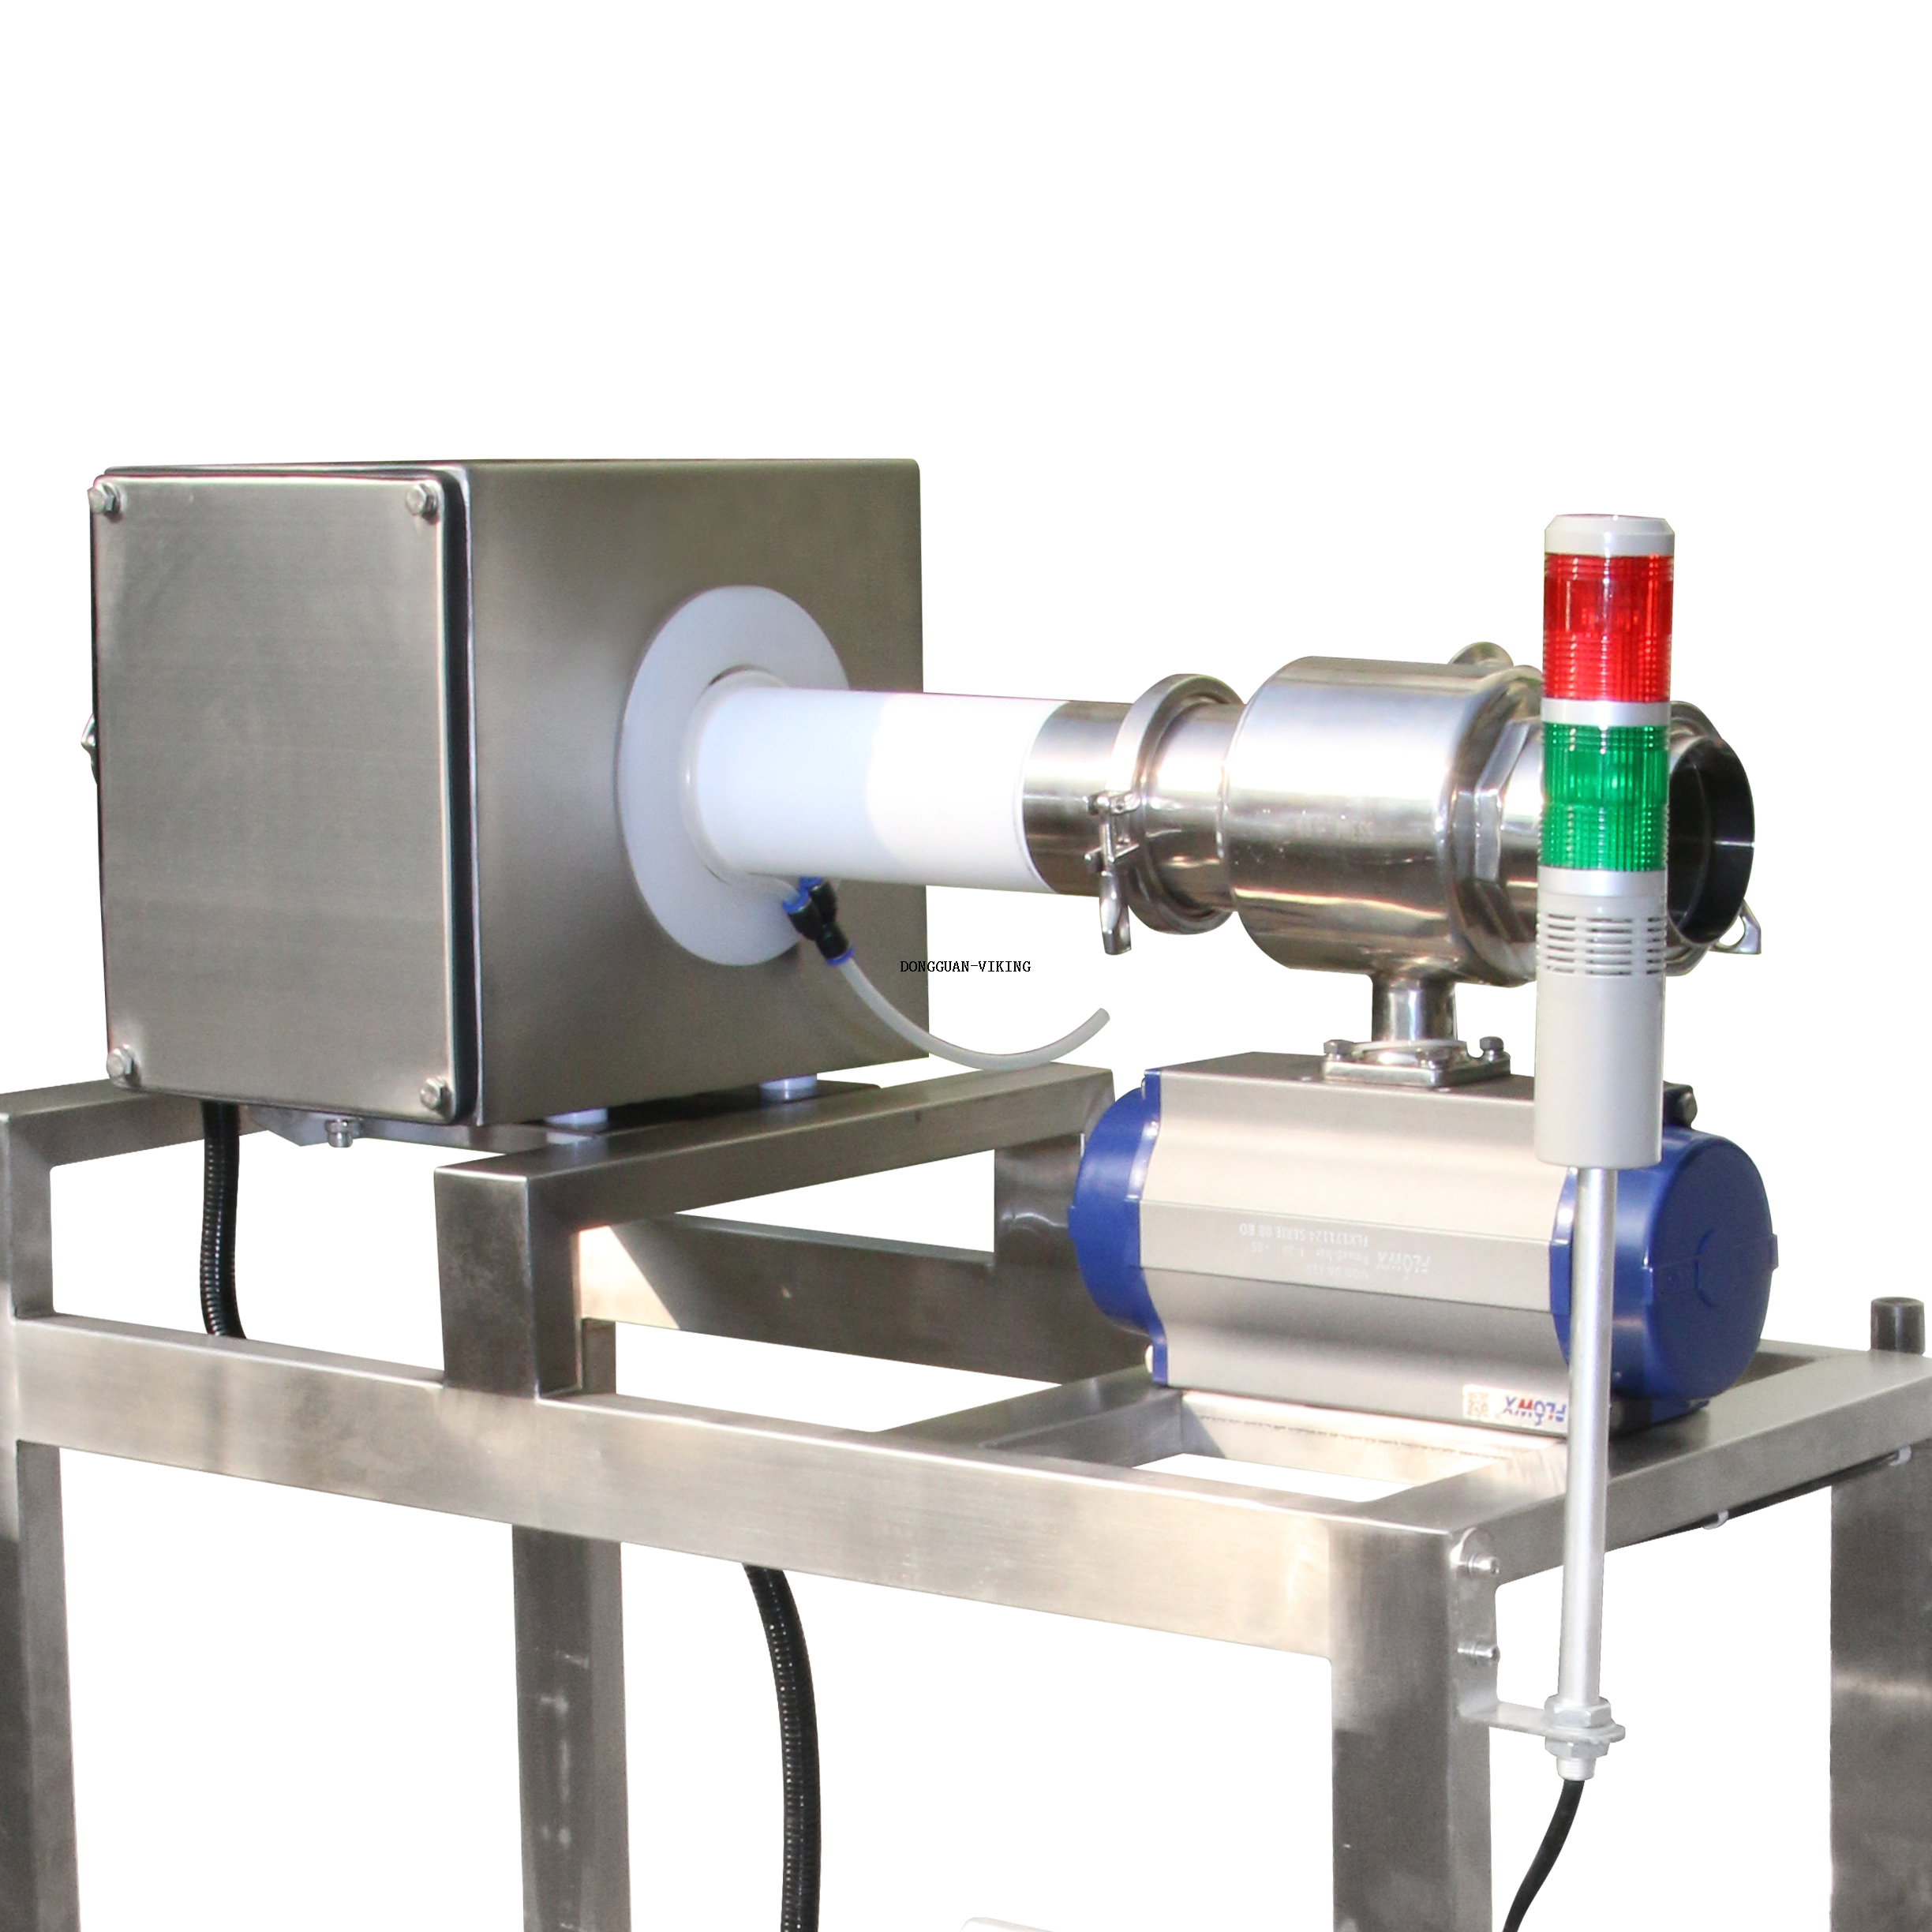 Pipeline liquid food grade metal detector for sauce and beverage